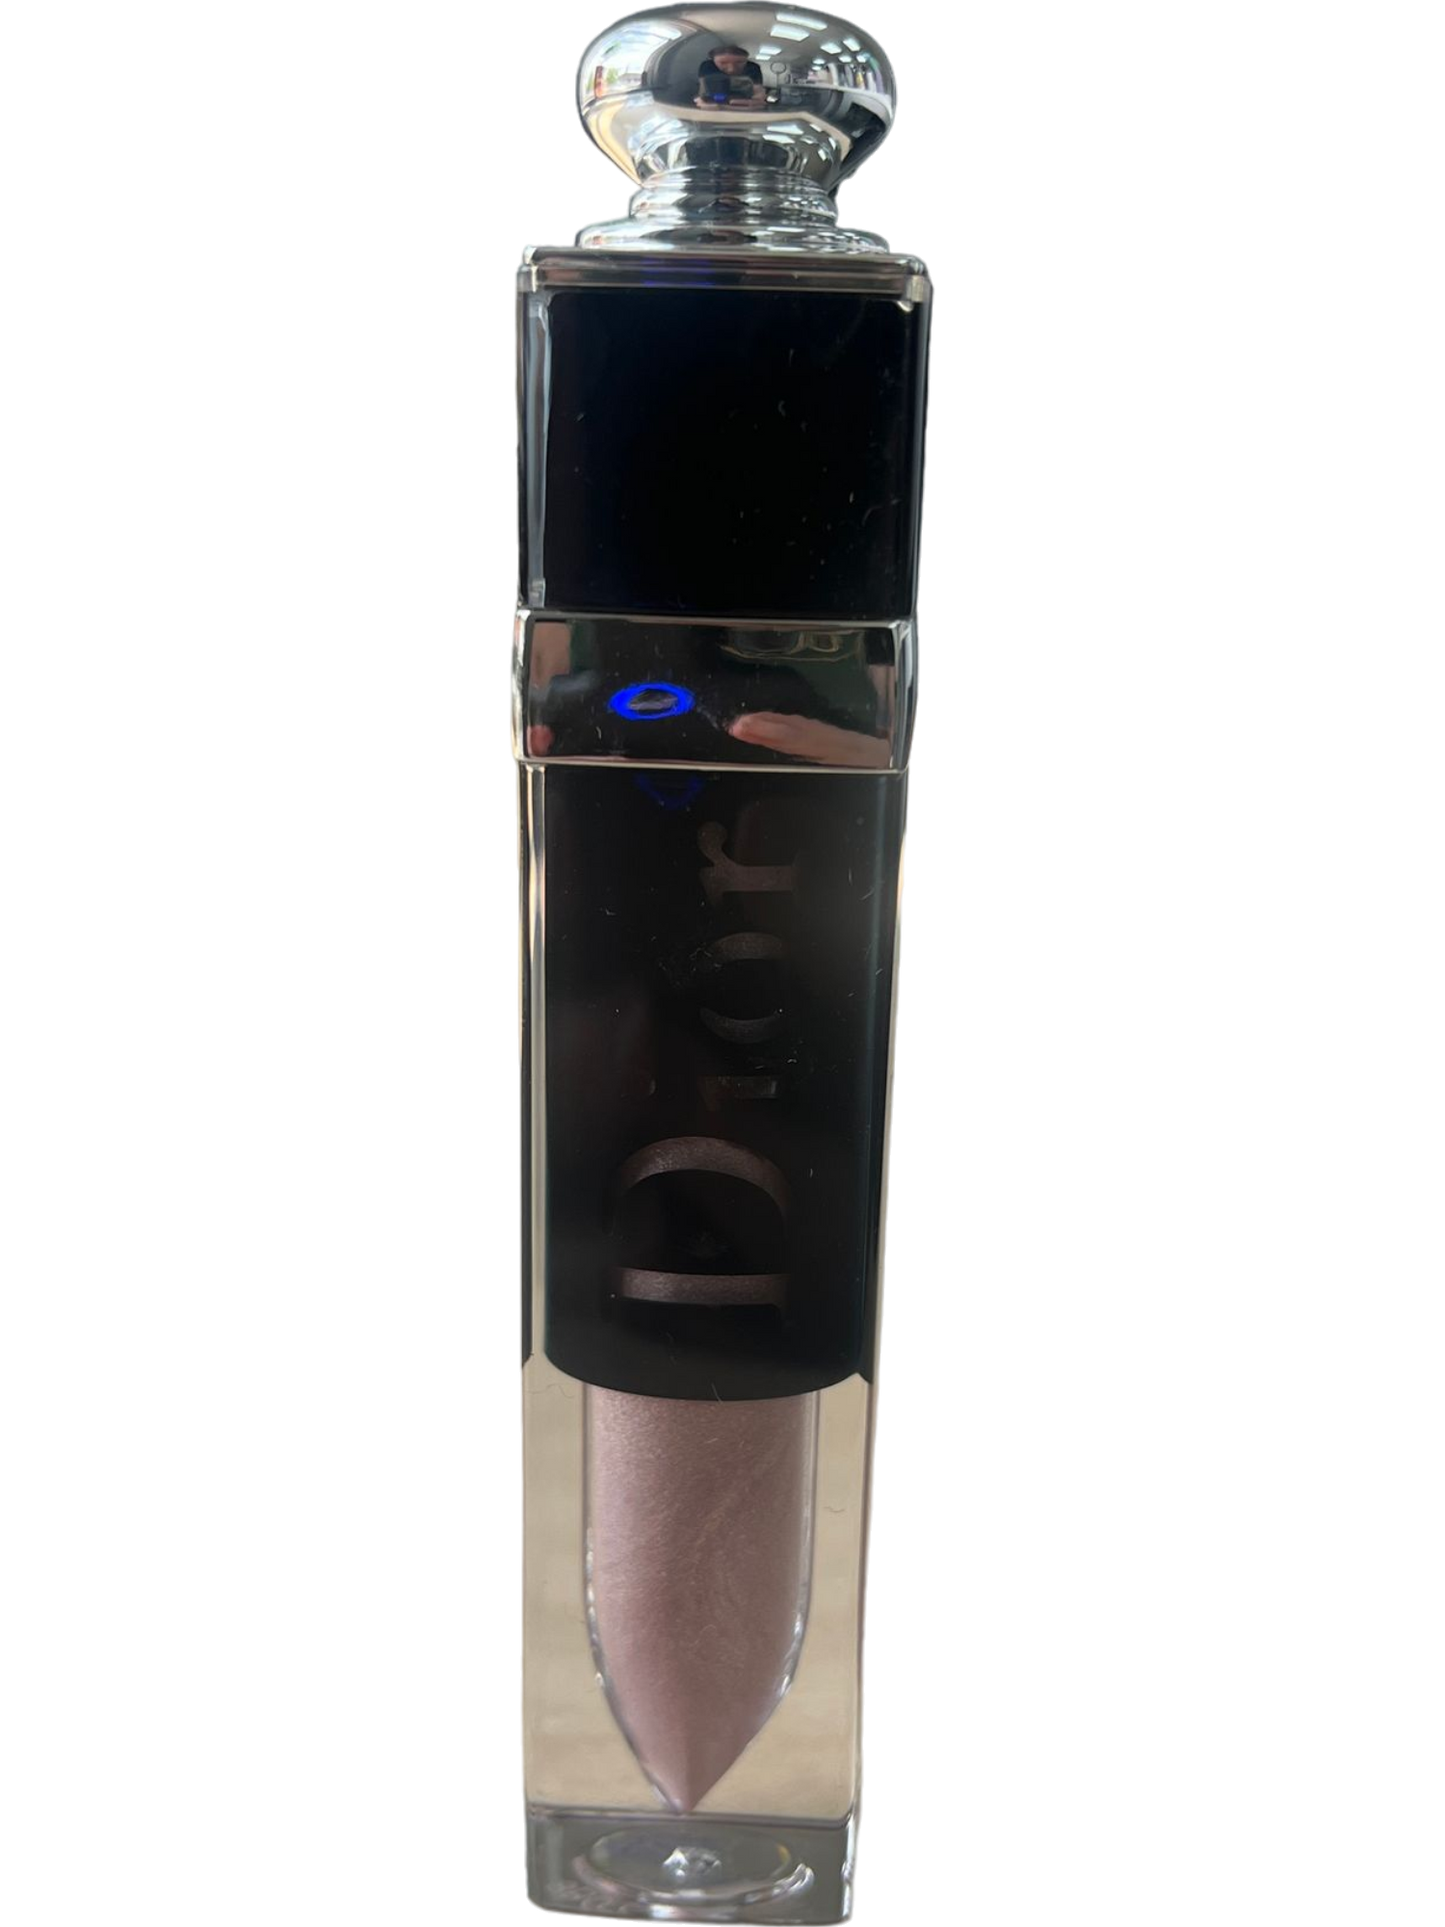 Dior Iconic Lipstick in Sophisticated Platinum Shade